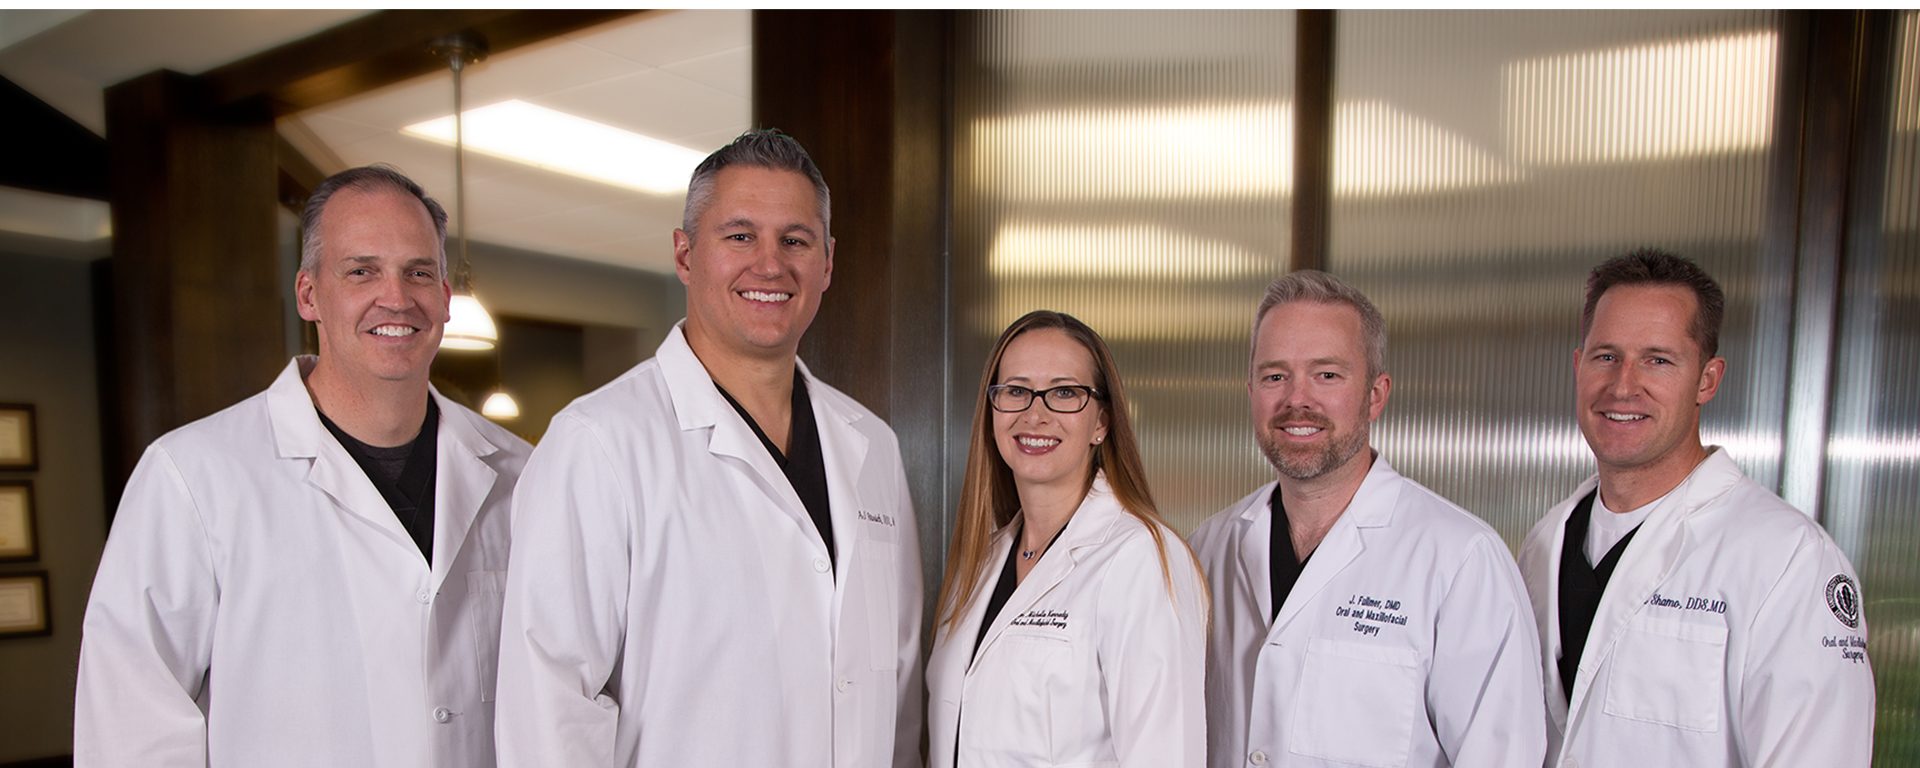 Dr Ryser, Dr. Stosich, Dr. Maak, Dr. Fullmer and Dr. Shamo of Aspire Surgical in Salt Lake City, UT